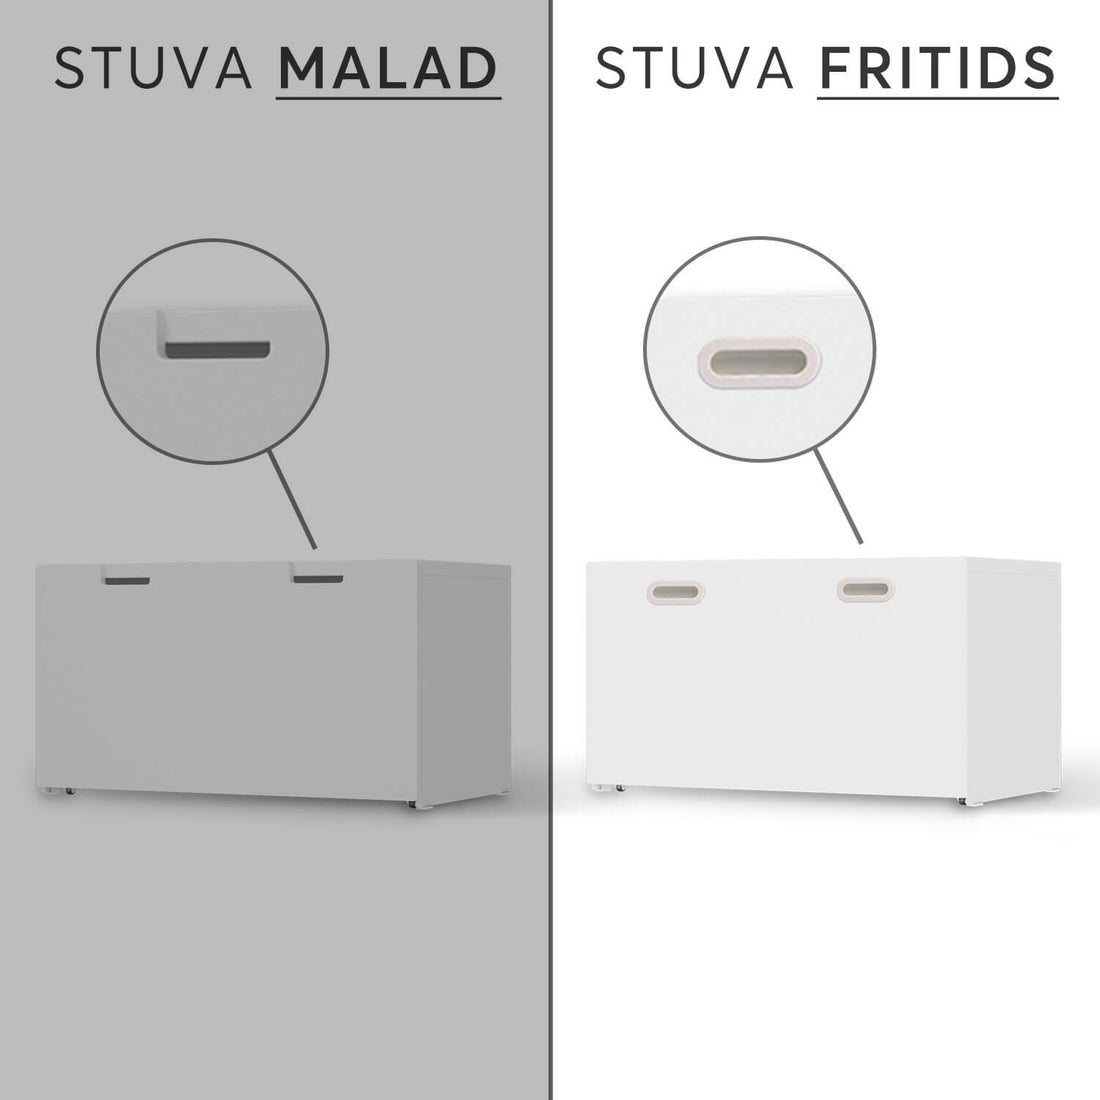 Vergleich IKEA Stuva Fritids / Malad - Teotihuacan